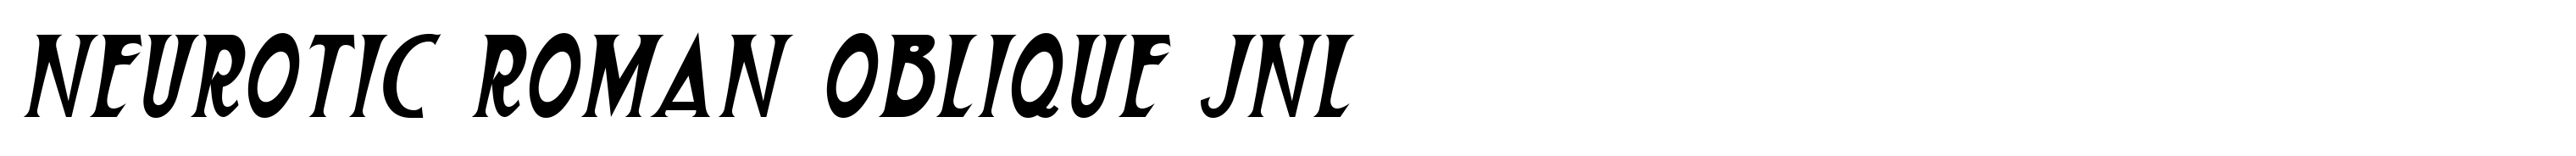 Neurotic Roman Oblique JNL